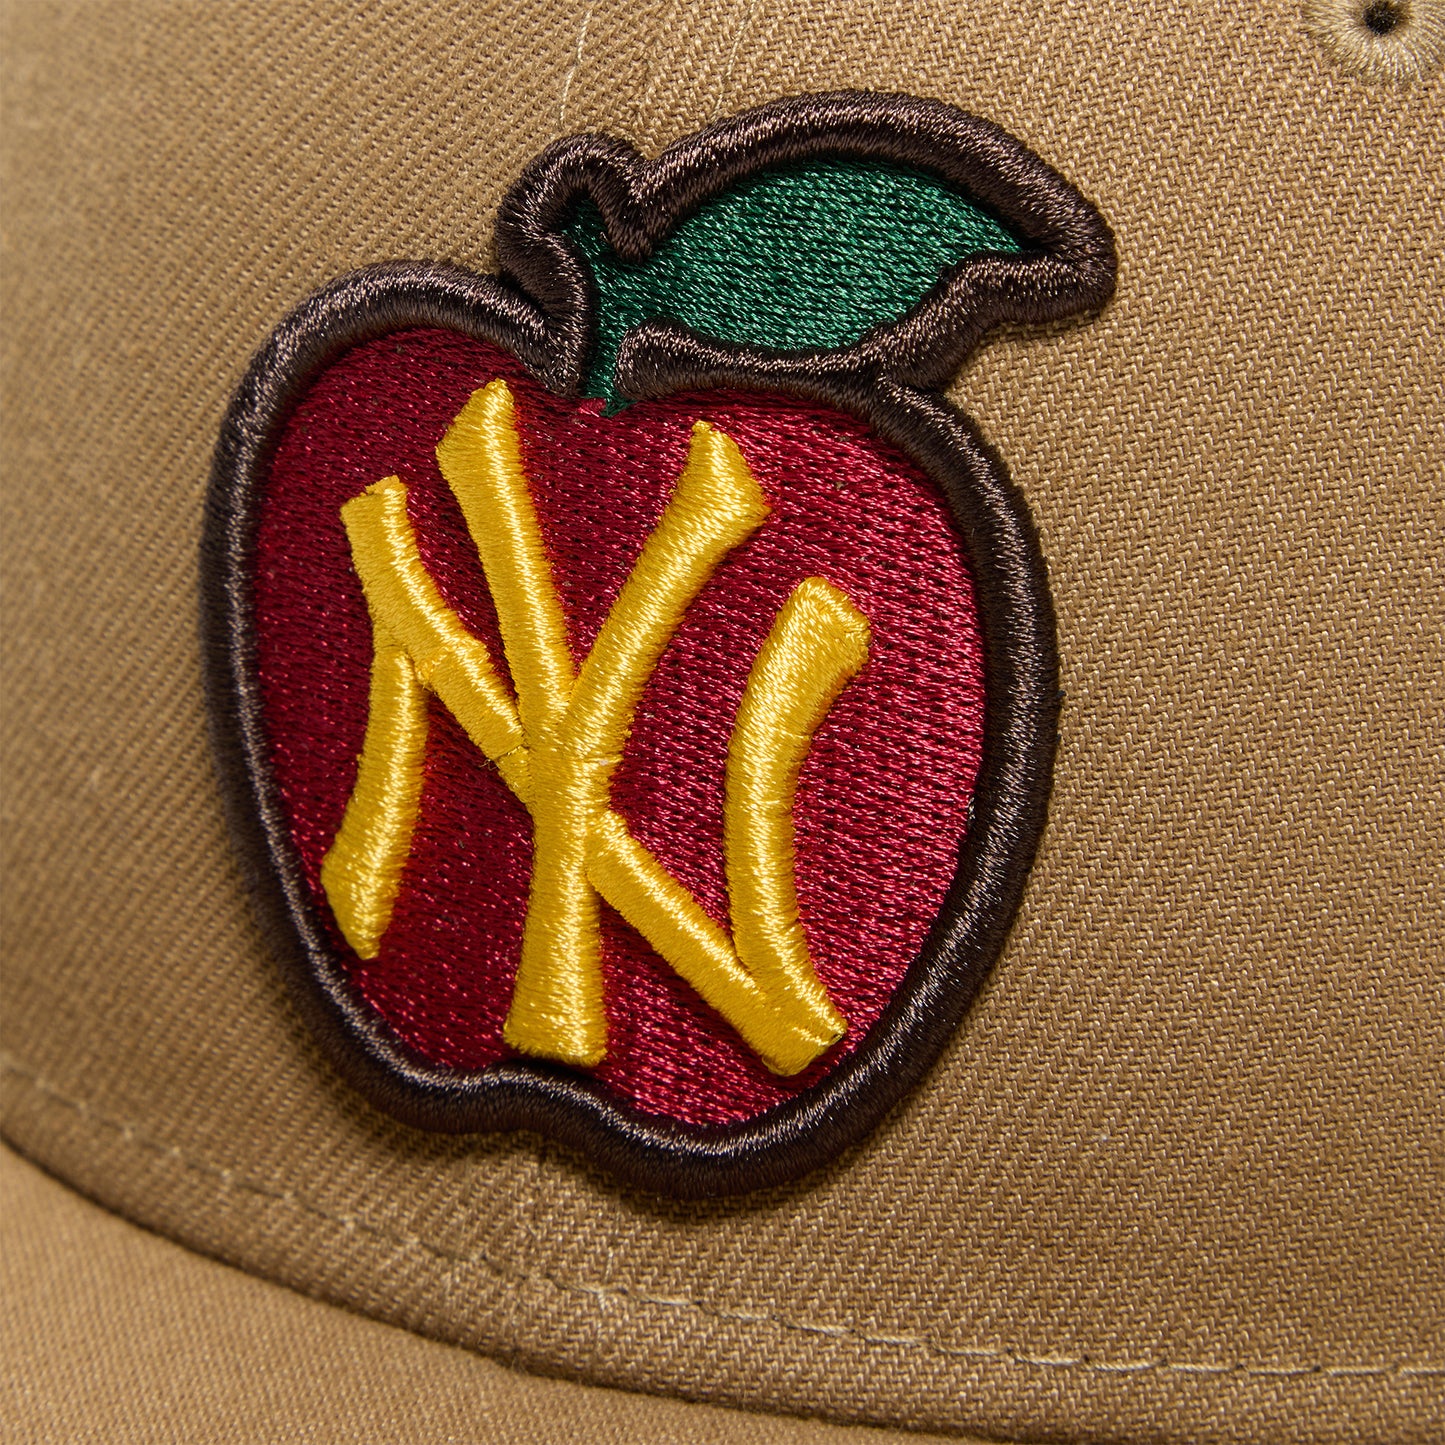 New Era New York Yankees 99 World Series 59Fifty Fitted Hat (Khaki)